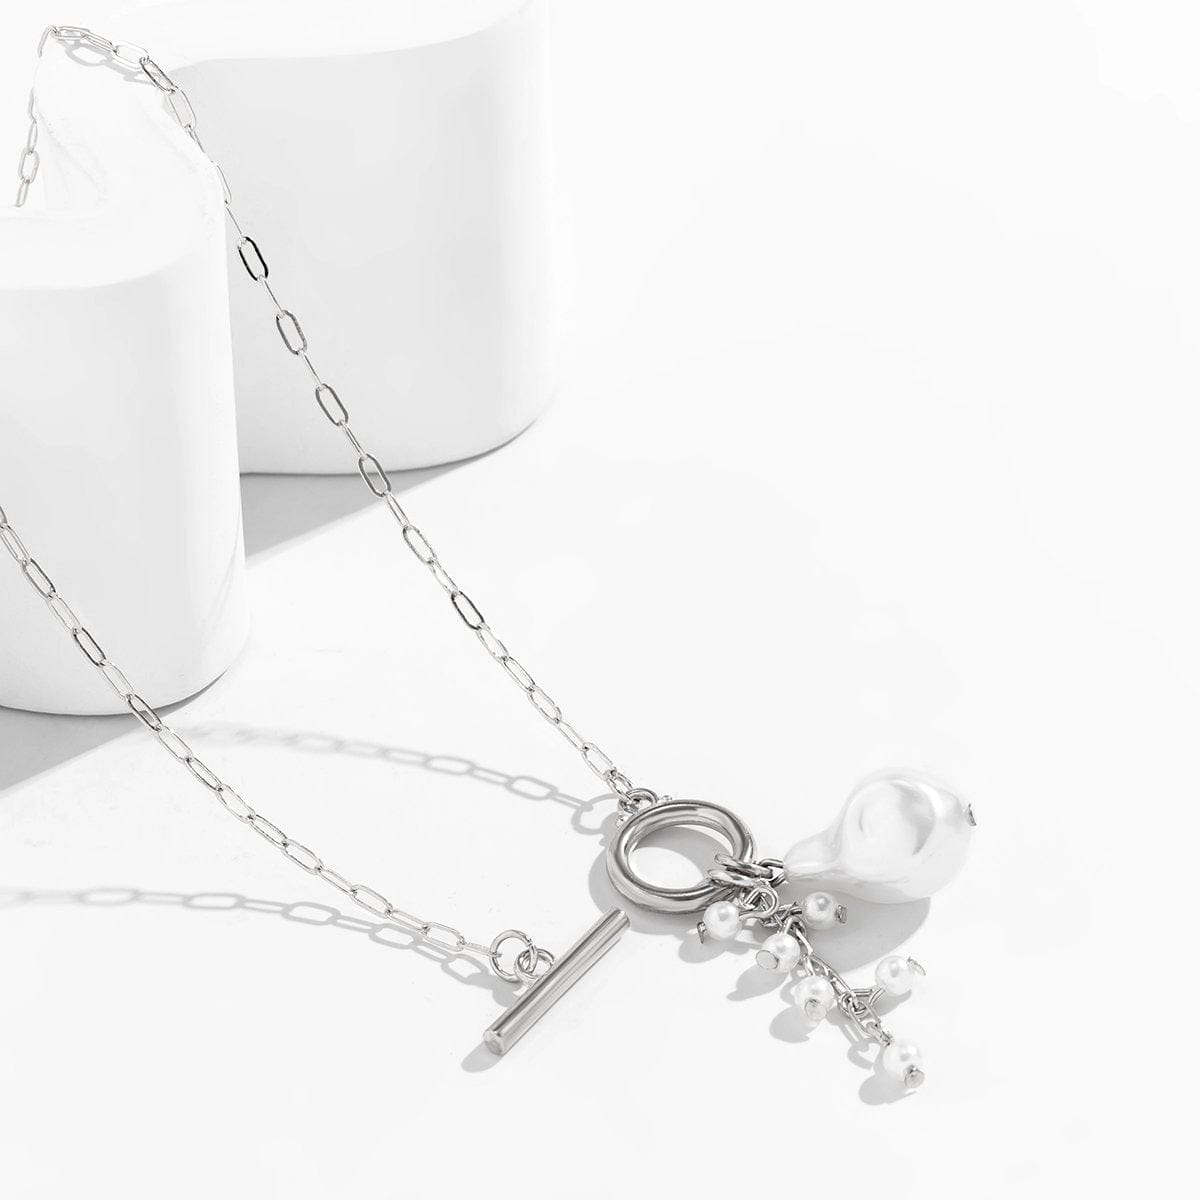 Chic Gold Silver Tone Toggle Clasp Pearl Tassel Cable Chain Choker Necklace - ArtGalleryZen